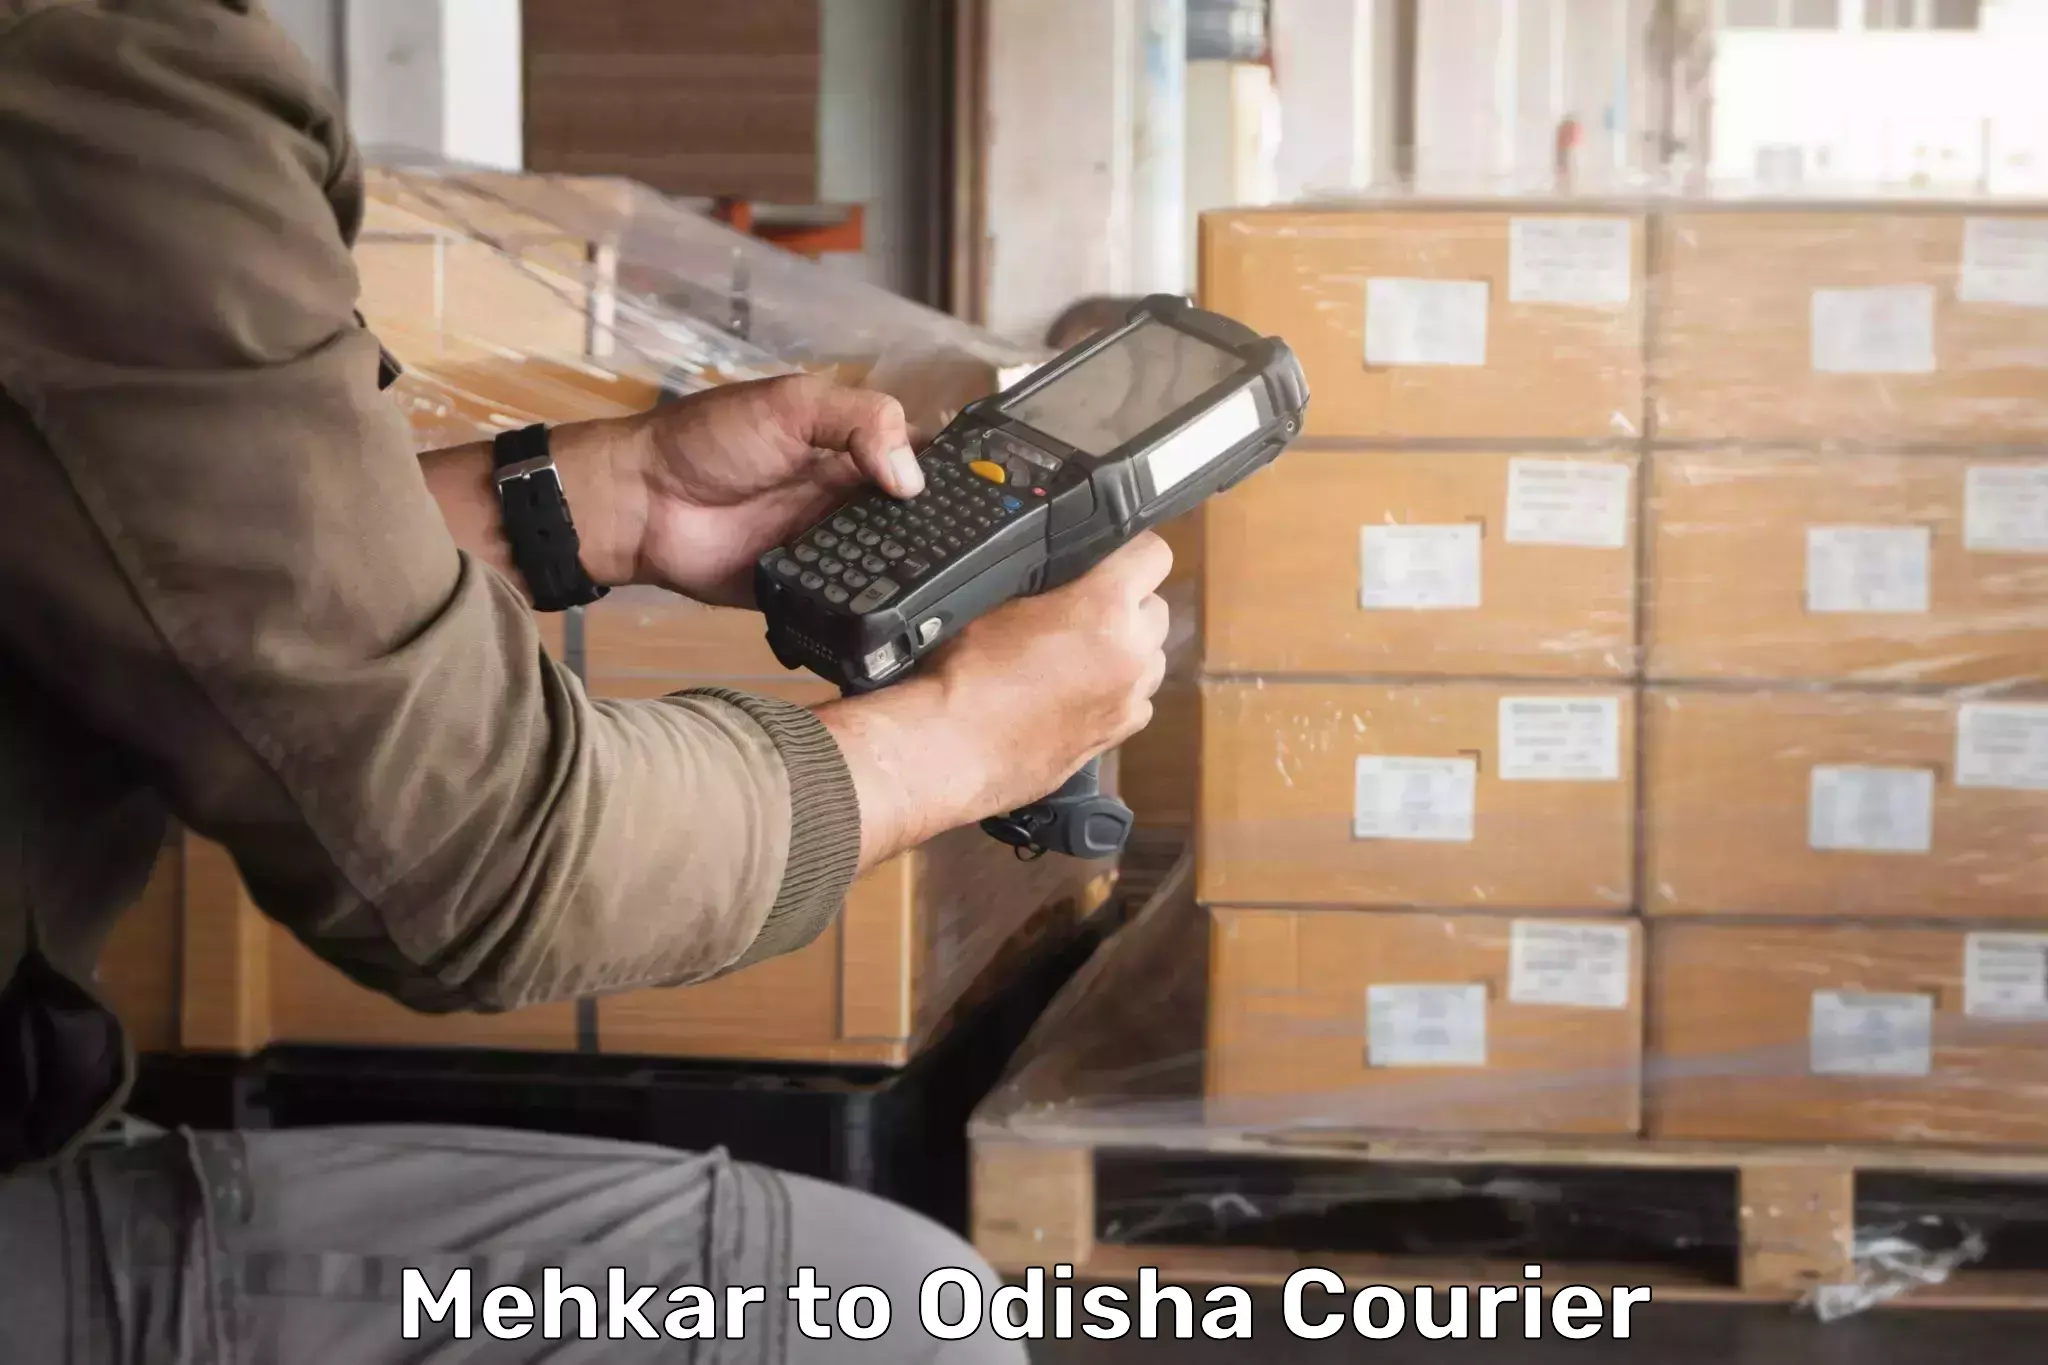 Courier service innovation Mehkar to Odisha